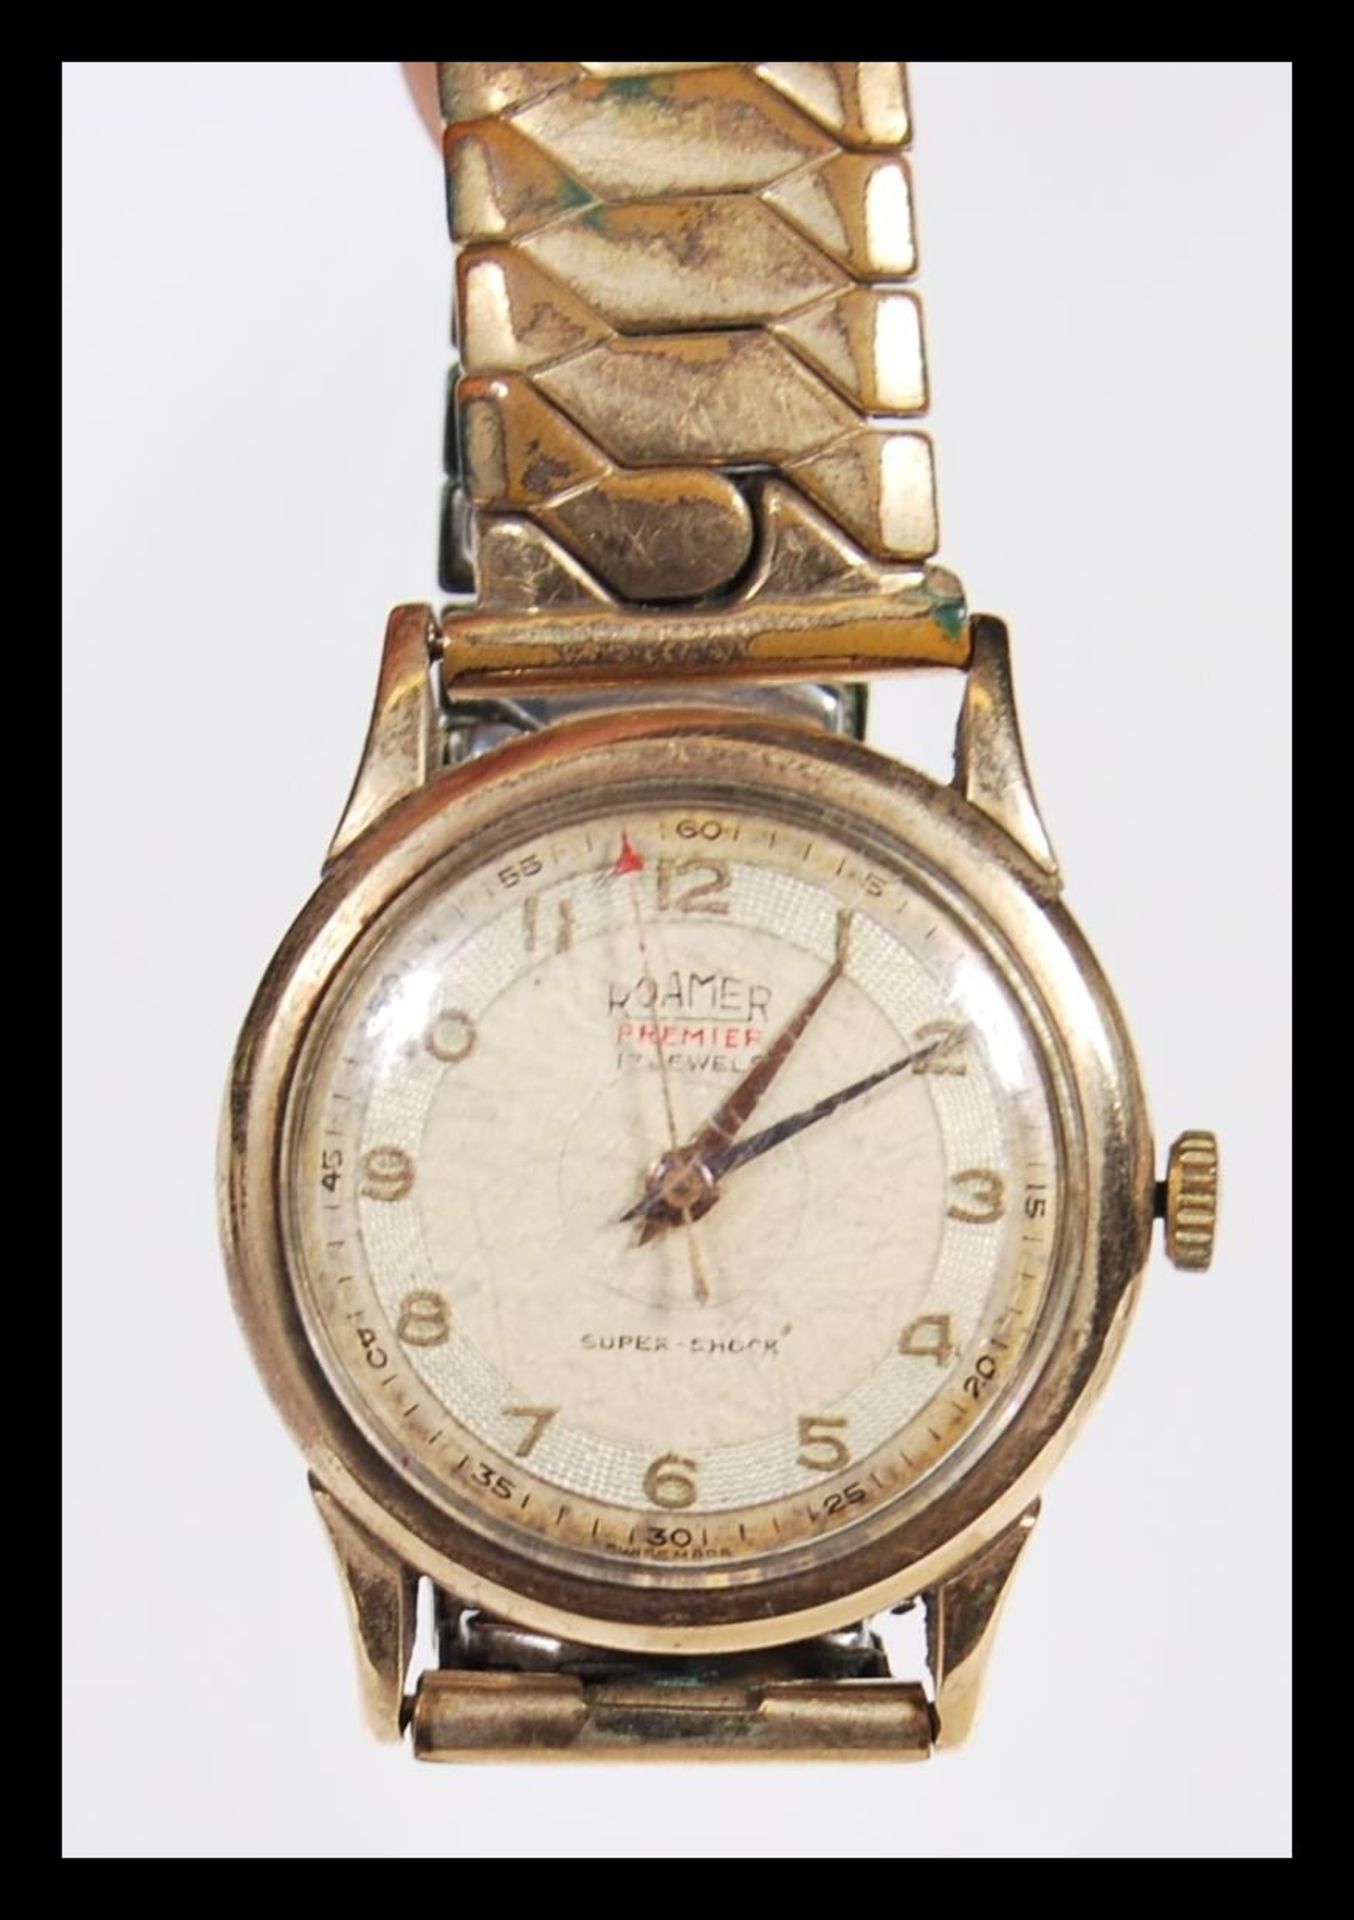 A Roamer premier 17 jewels super shock gentleman's wrist watch, having a round face with gilt arabic